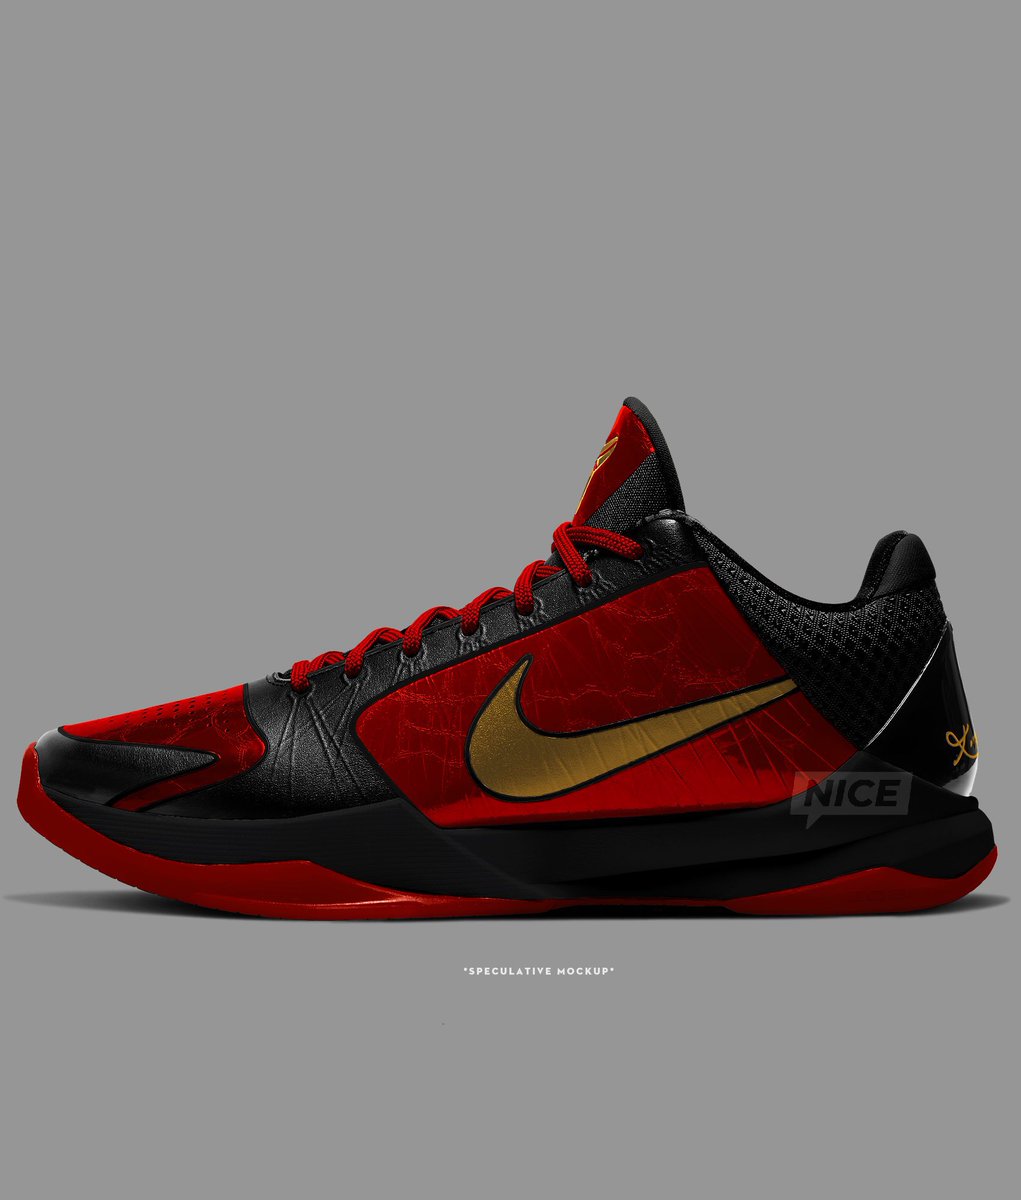 “University Red” Nike Kobe 5 Protro’s set to drop next year ♨️